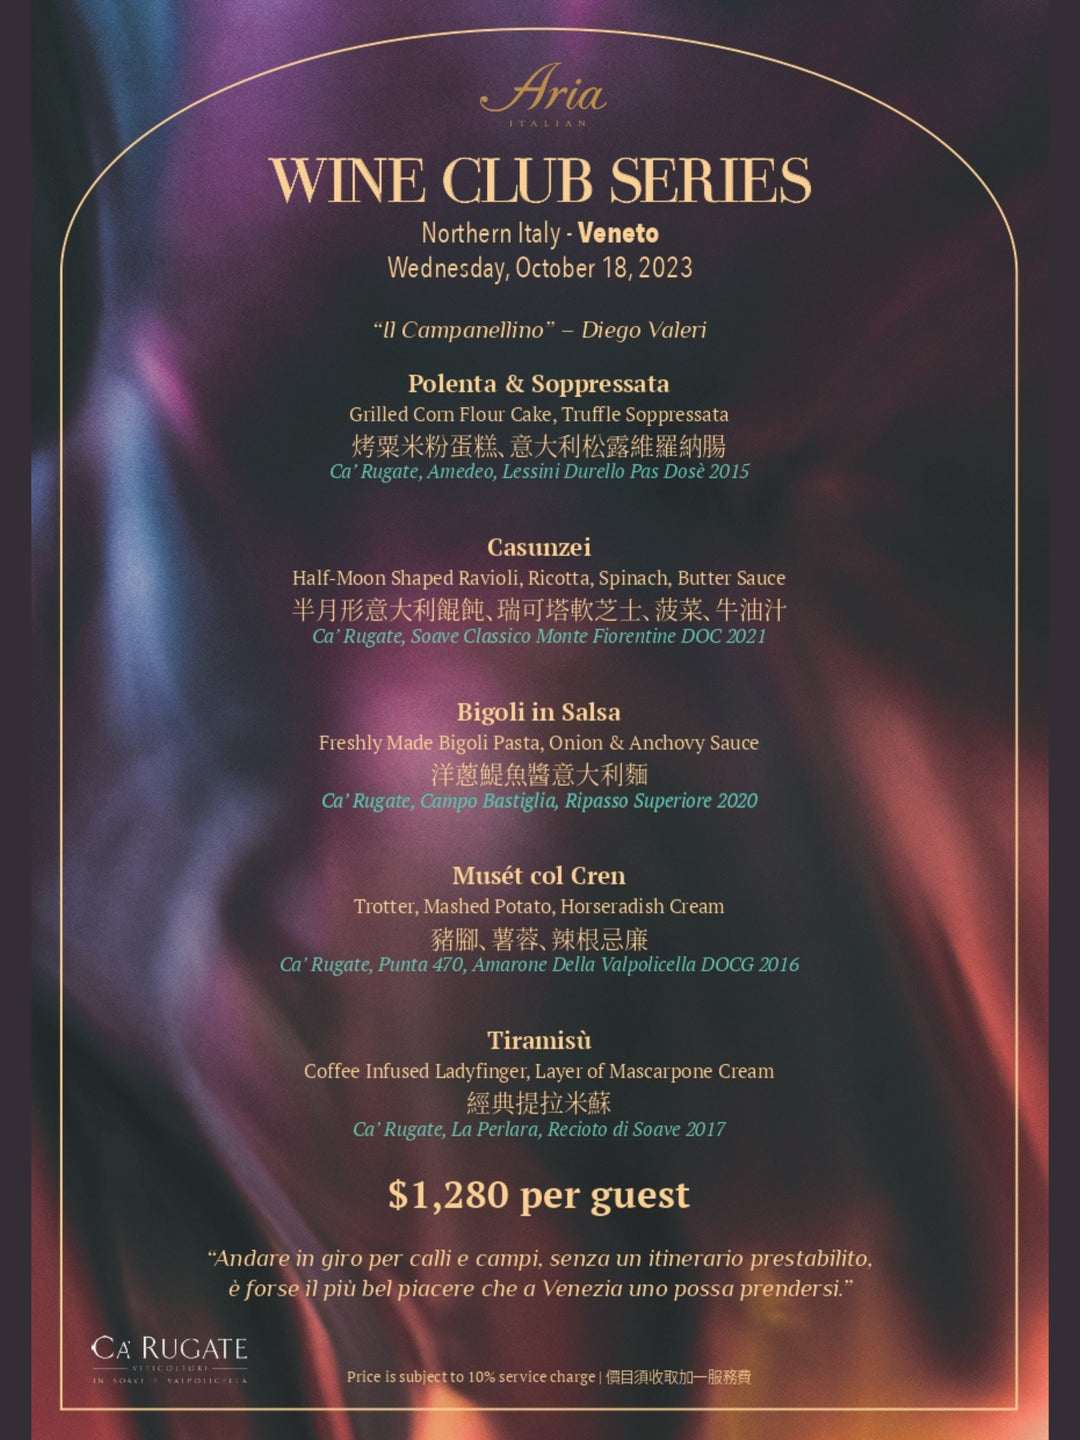 Aria Wine Club Series - Northern Italy - Veneto Wine Dinner [Deposit]